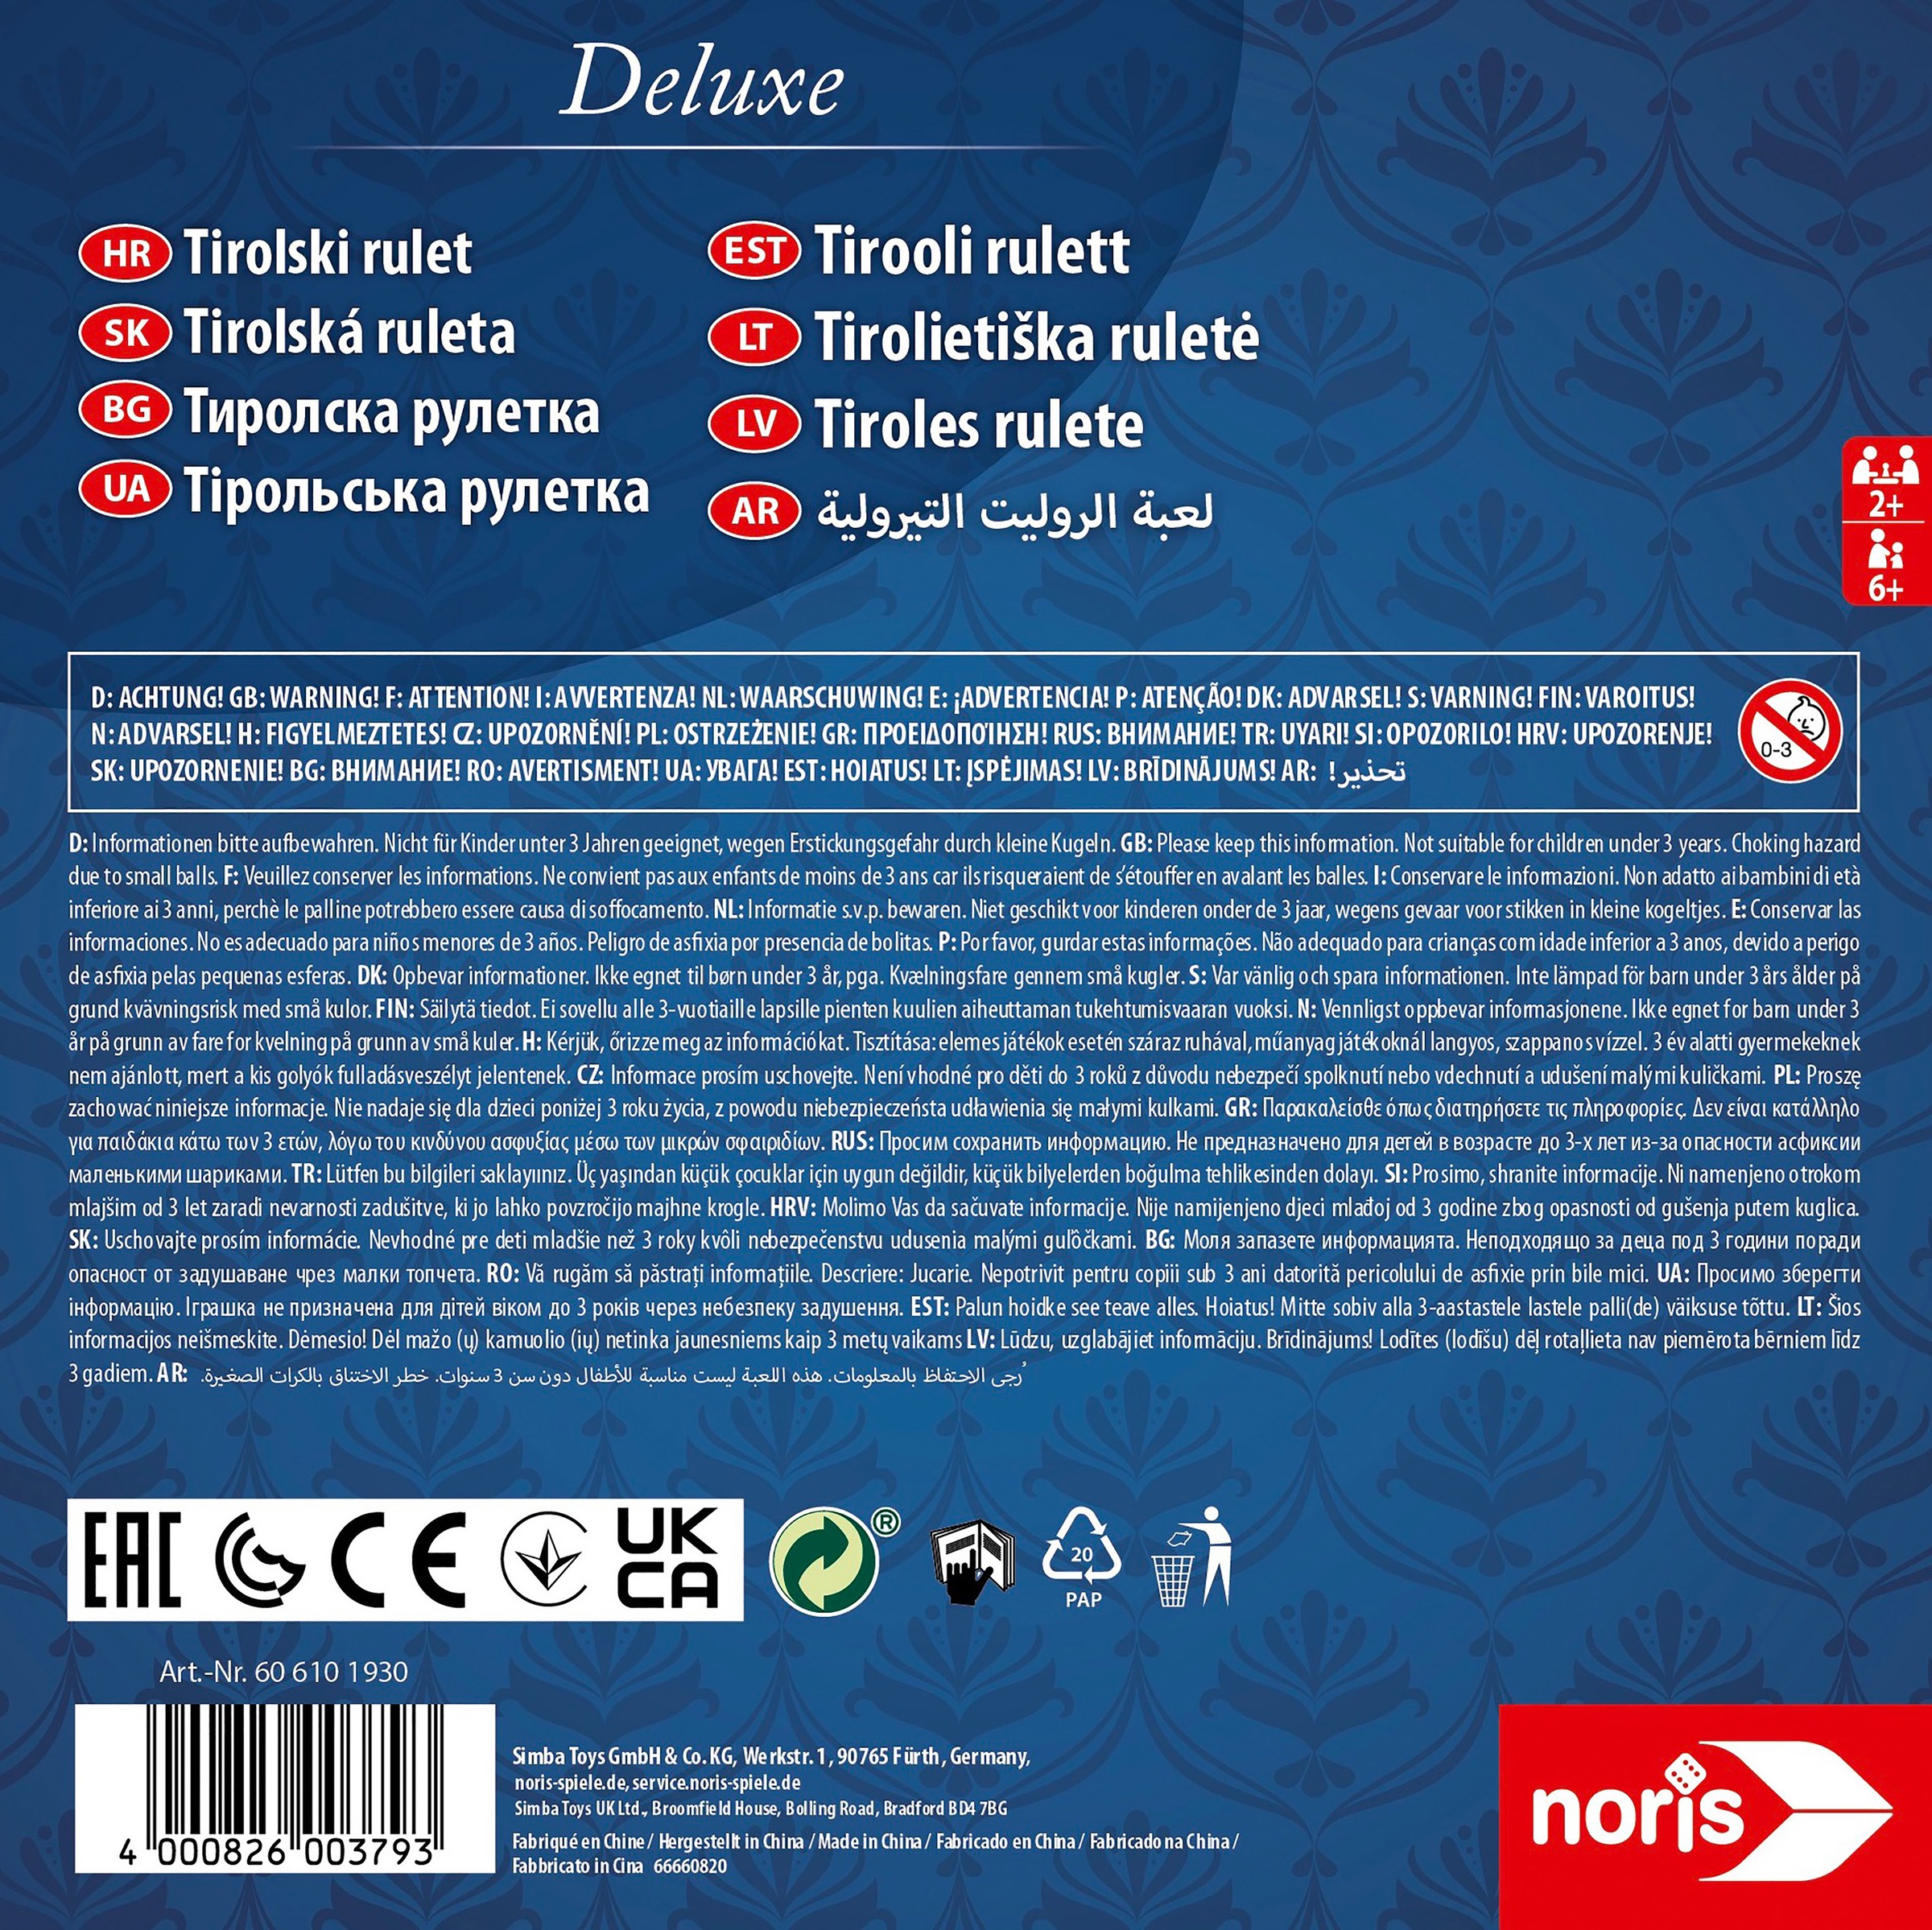 Noris Spiel »Deluxe Tiroler Roulette«